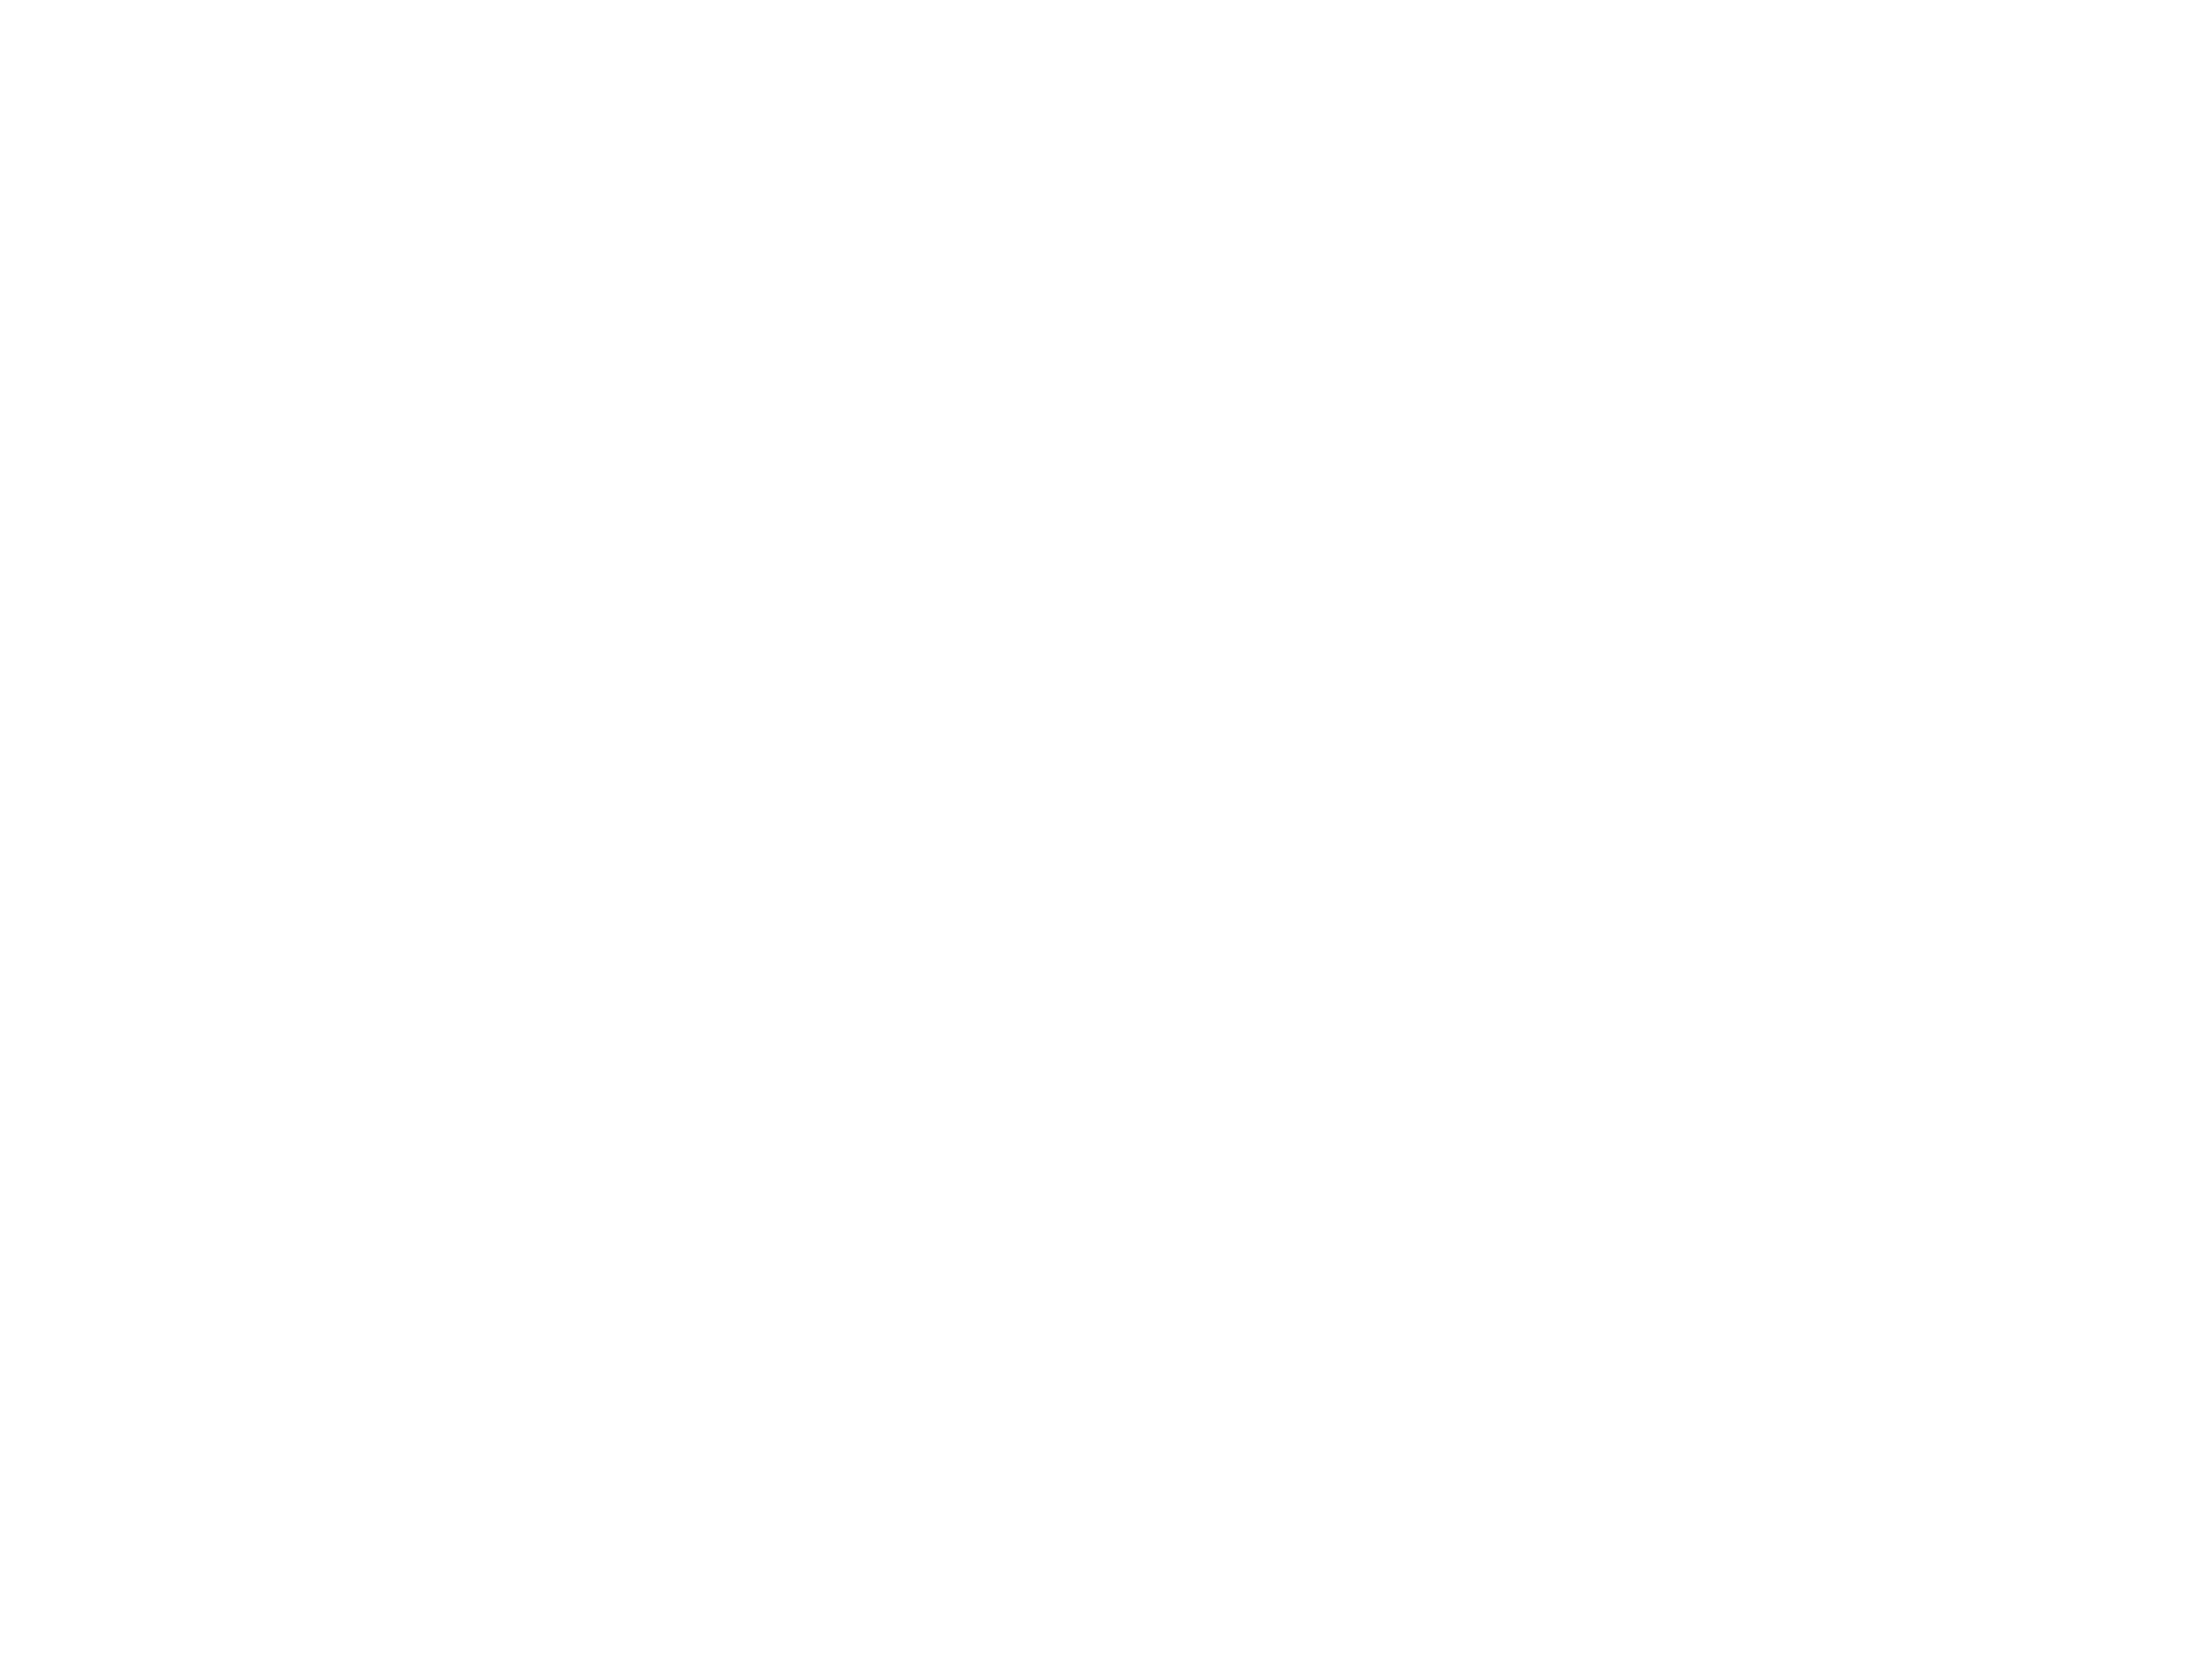 Toro Strategic